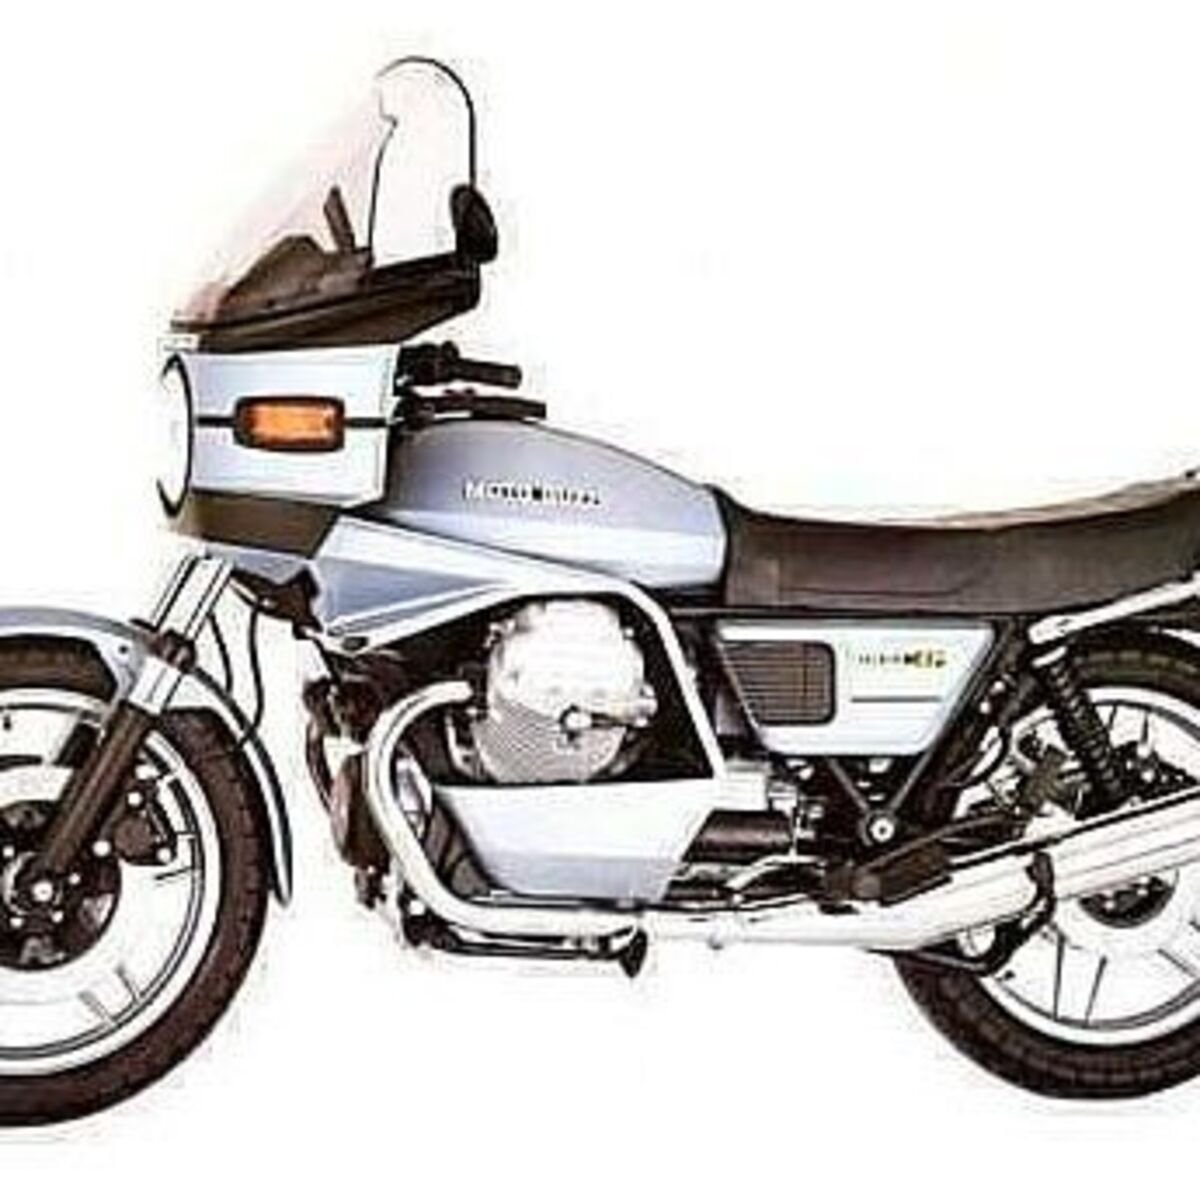 Moto Guzzi SP 1000 (1978 - 85)